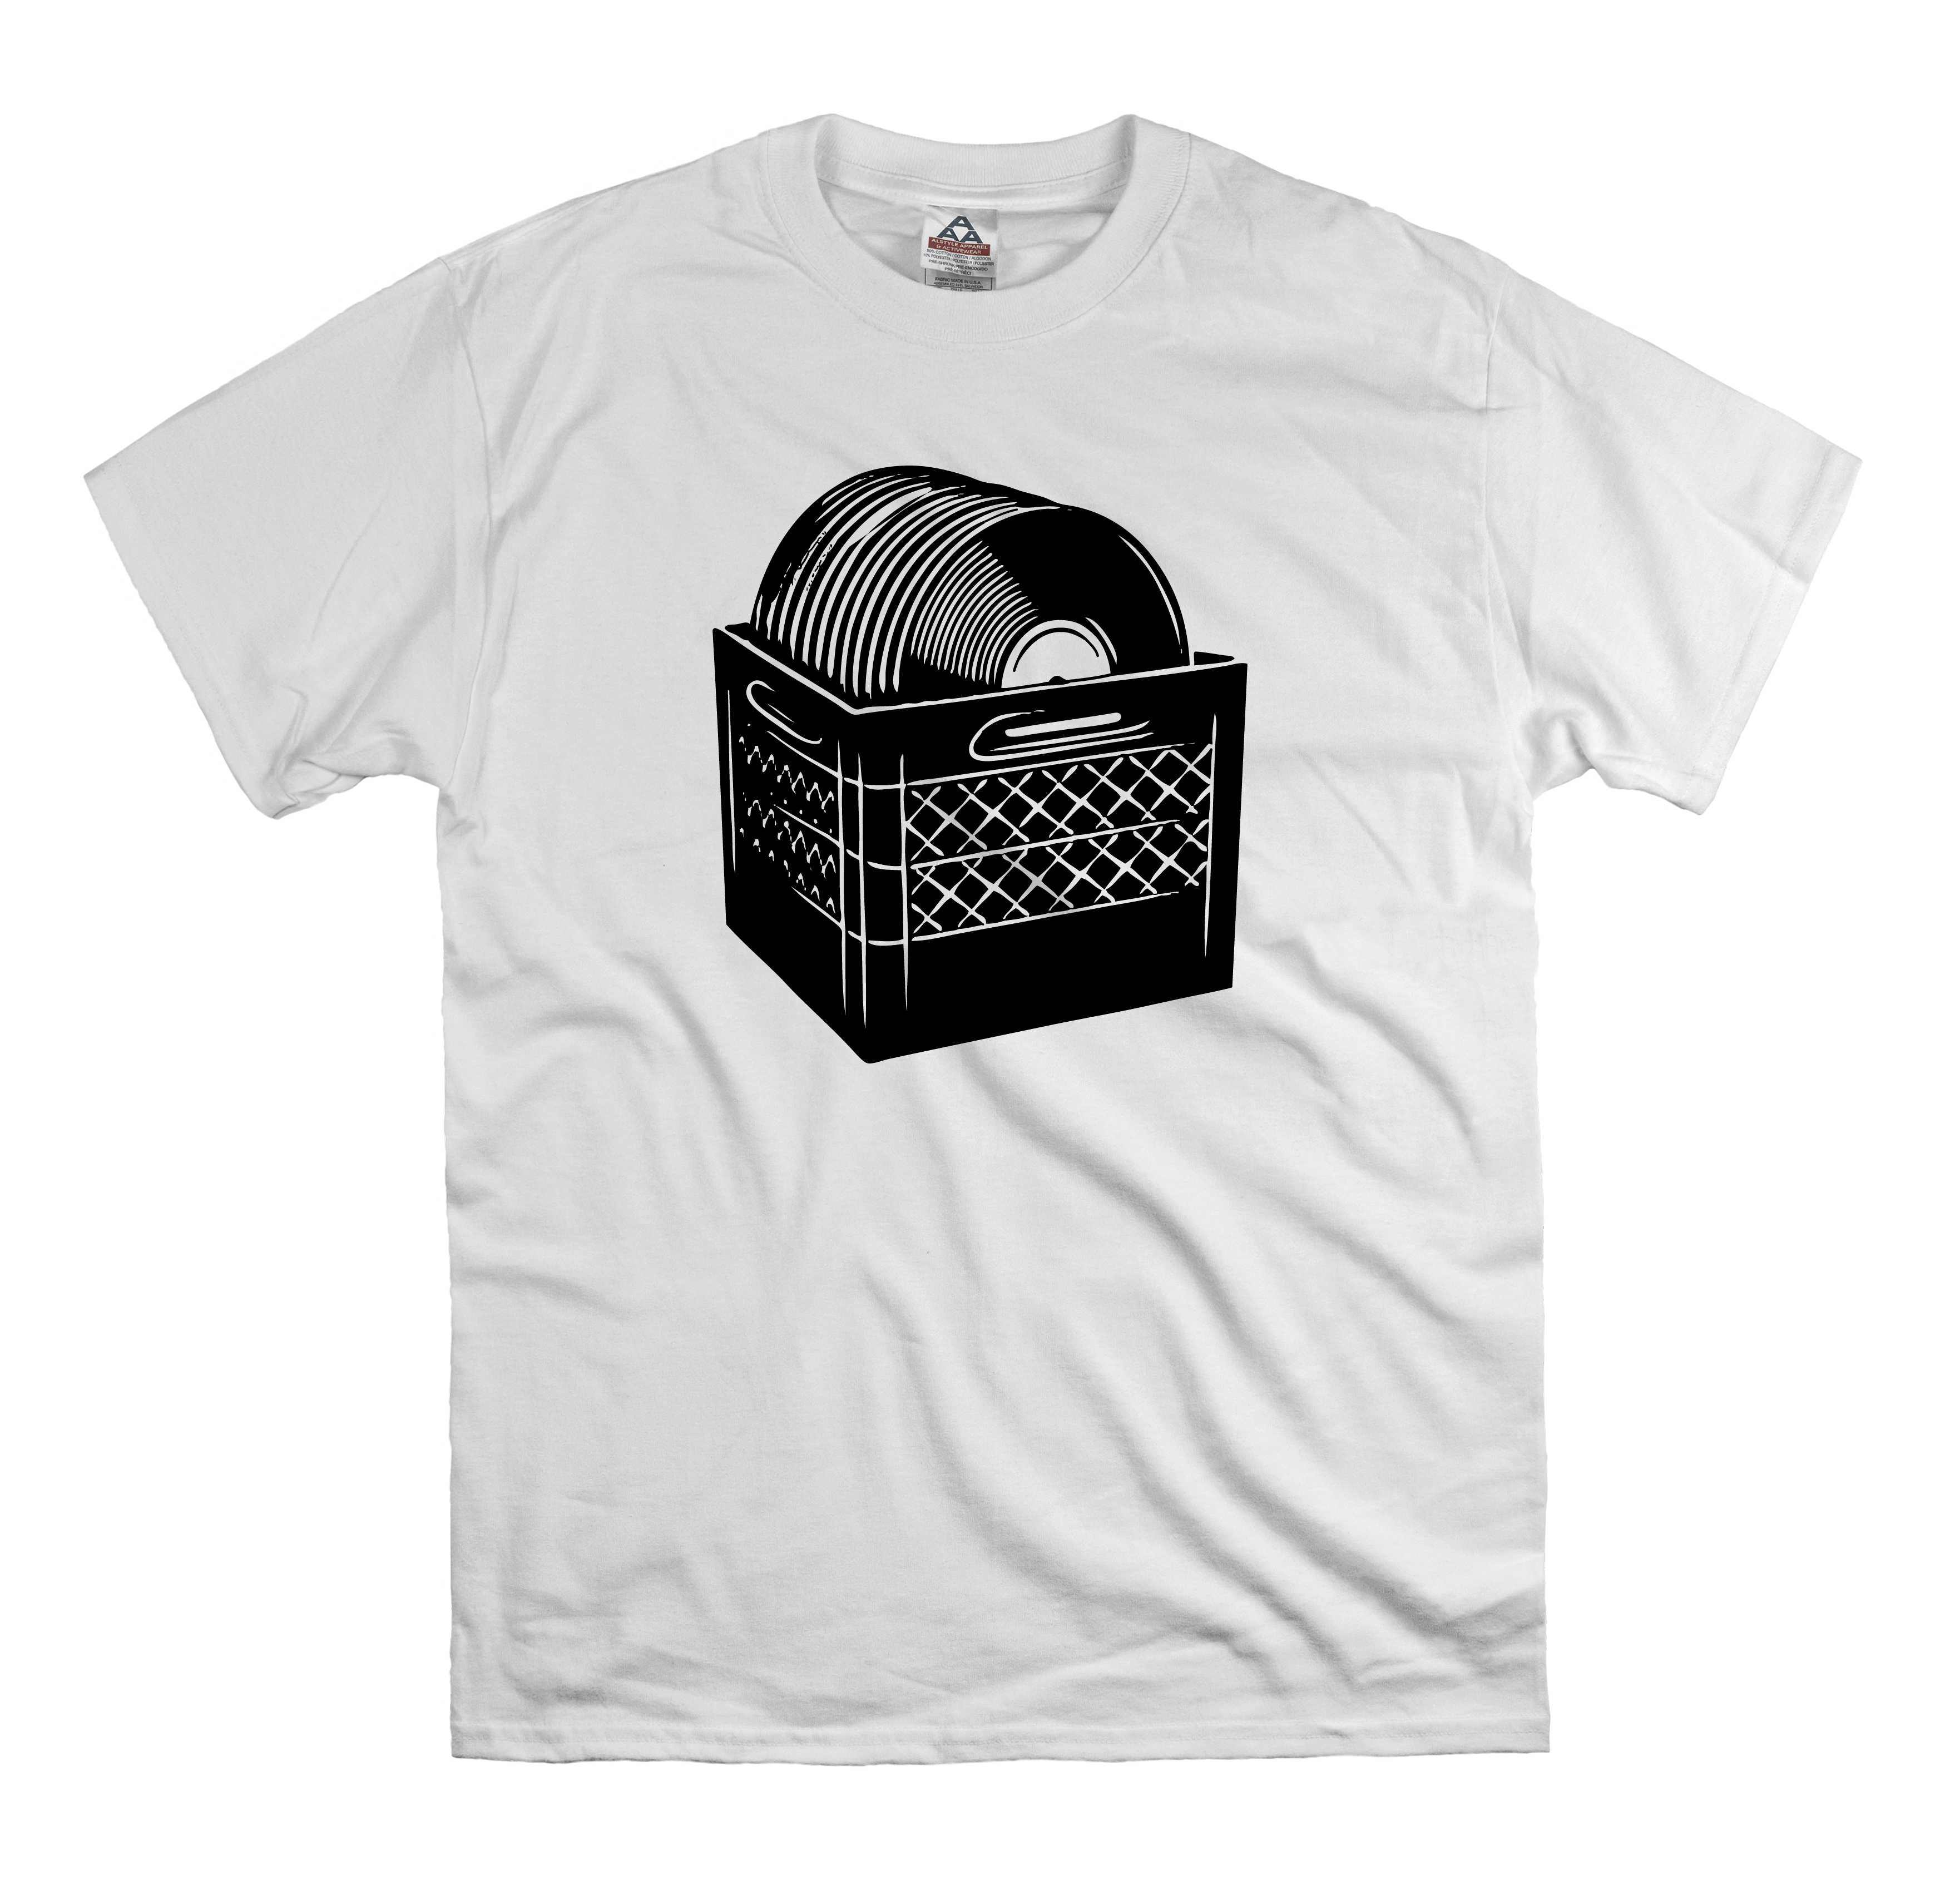 Crate of records t shirt tshirt crate digging shirt ditc rare records shirt